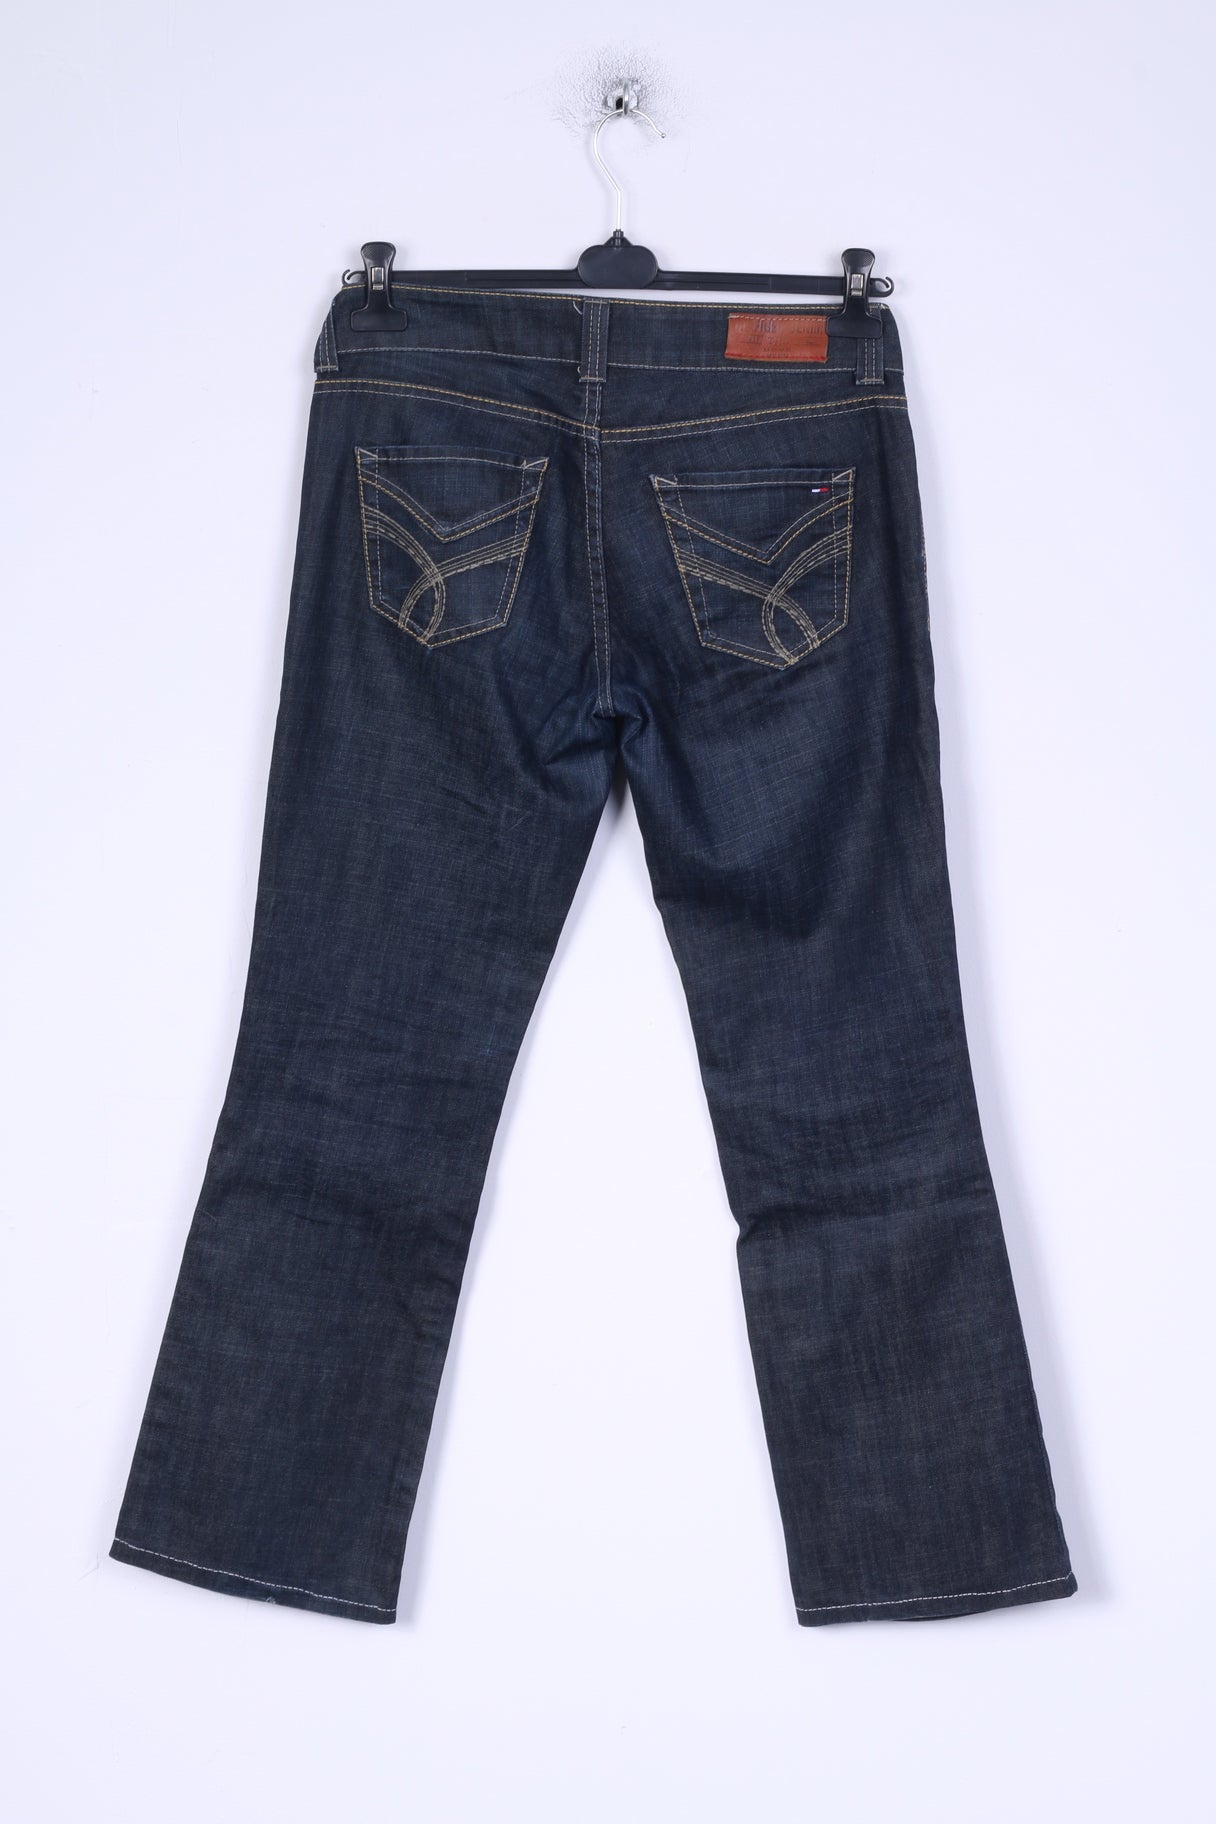 Hilfiger Denim Sally Womens W29 L32 Jeans Trousers Navy Low Waist Bootcut